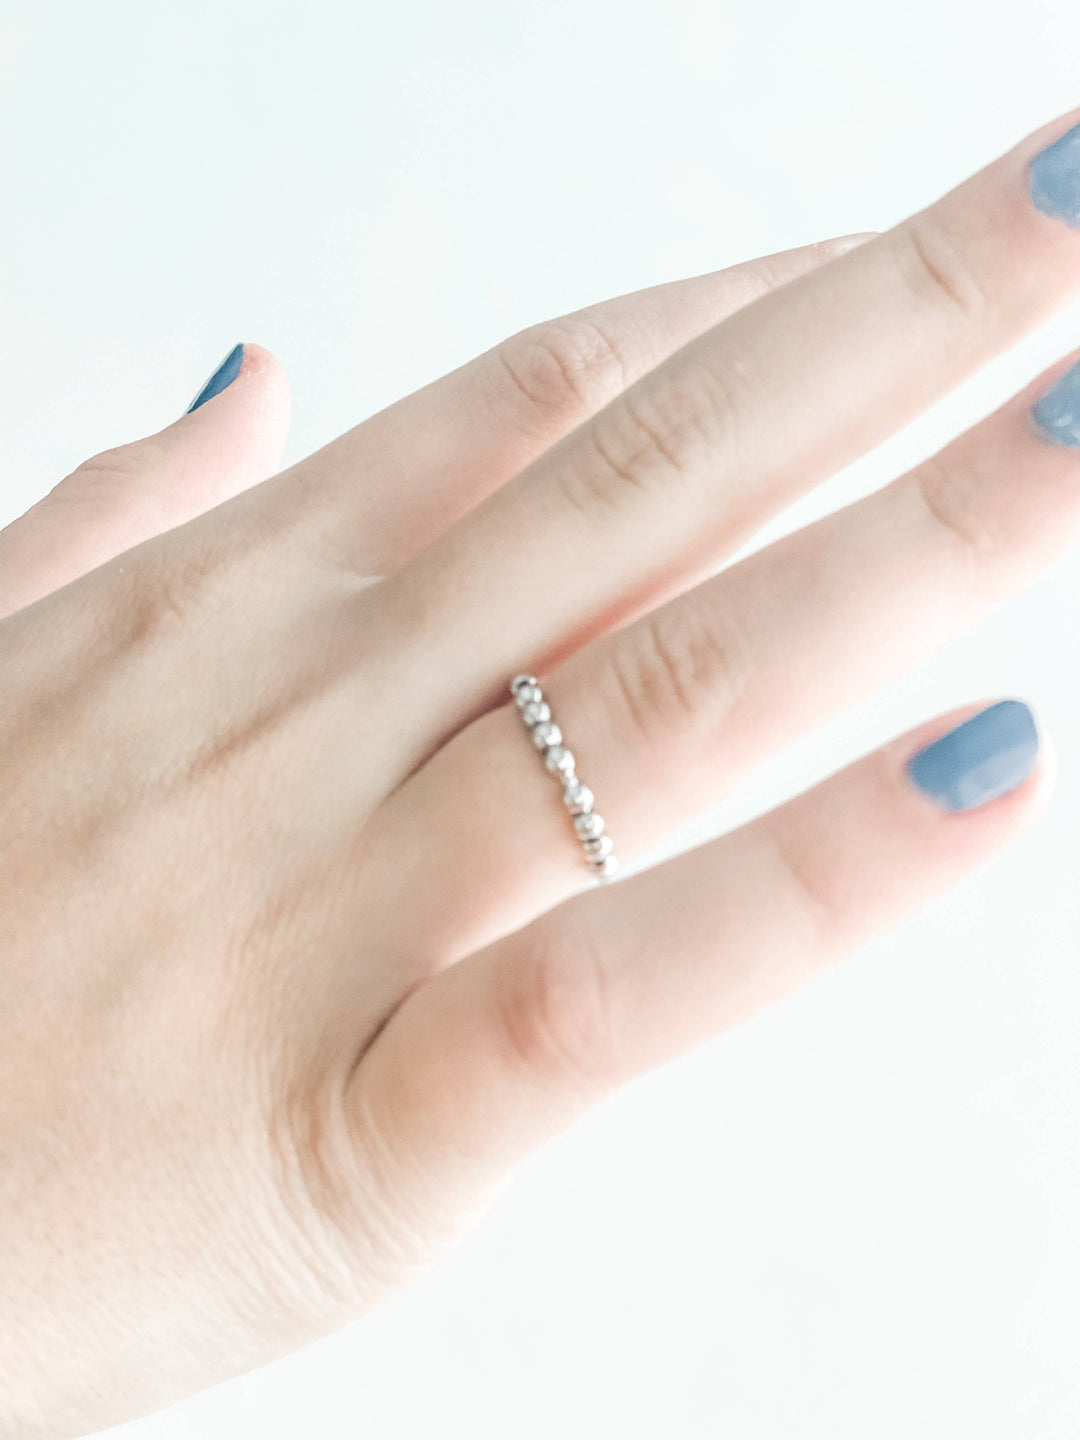 Rings - Fidget Ring "Silver"